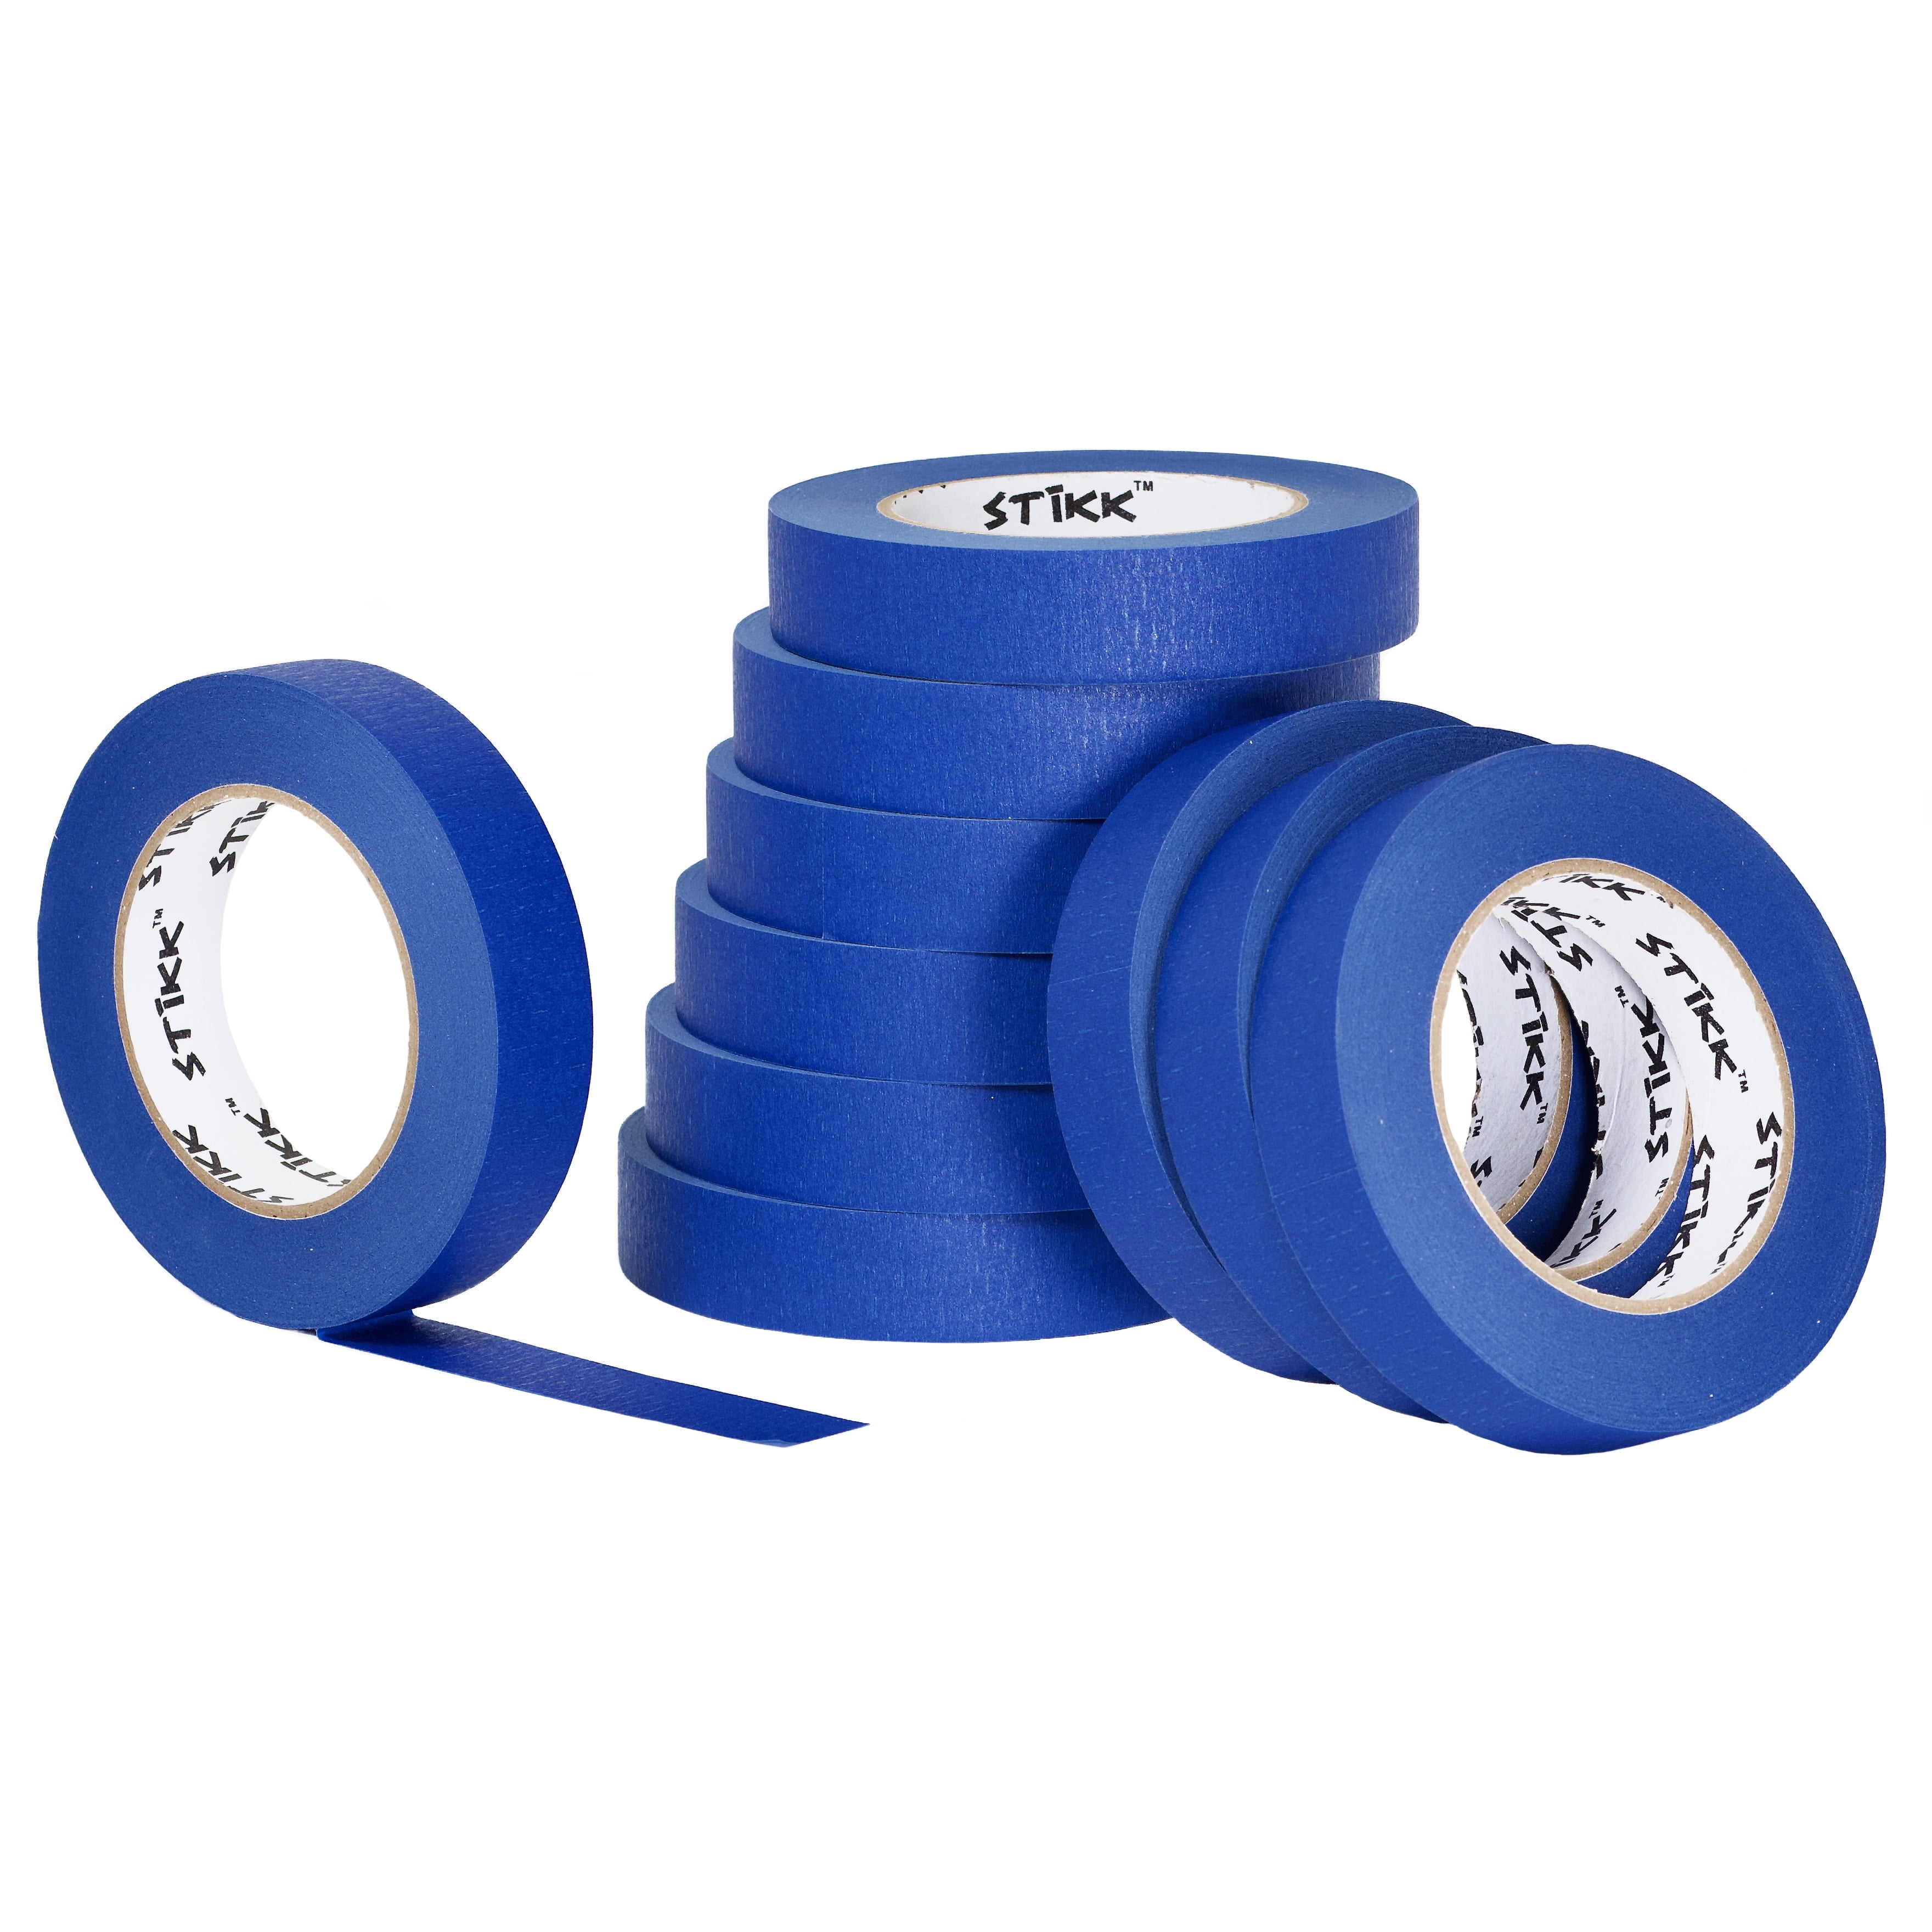 Premium Grade Masking Tape, 1 x 55 yds, Blue - DSS46163, Dss Distributing